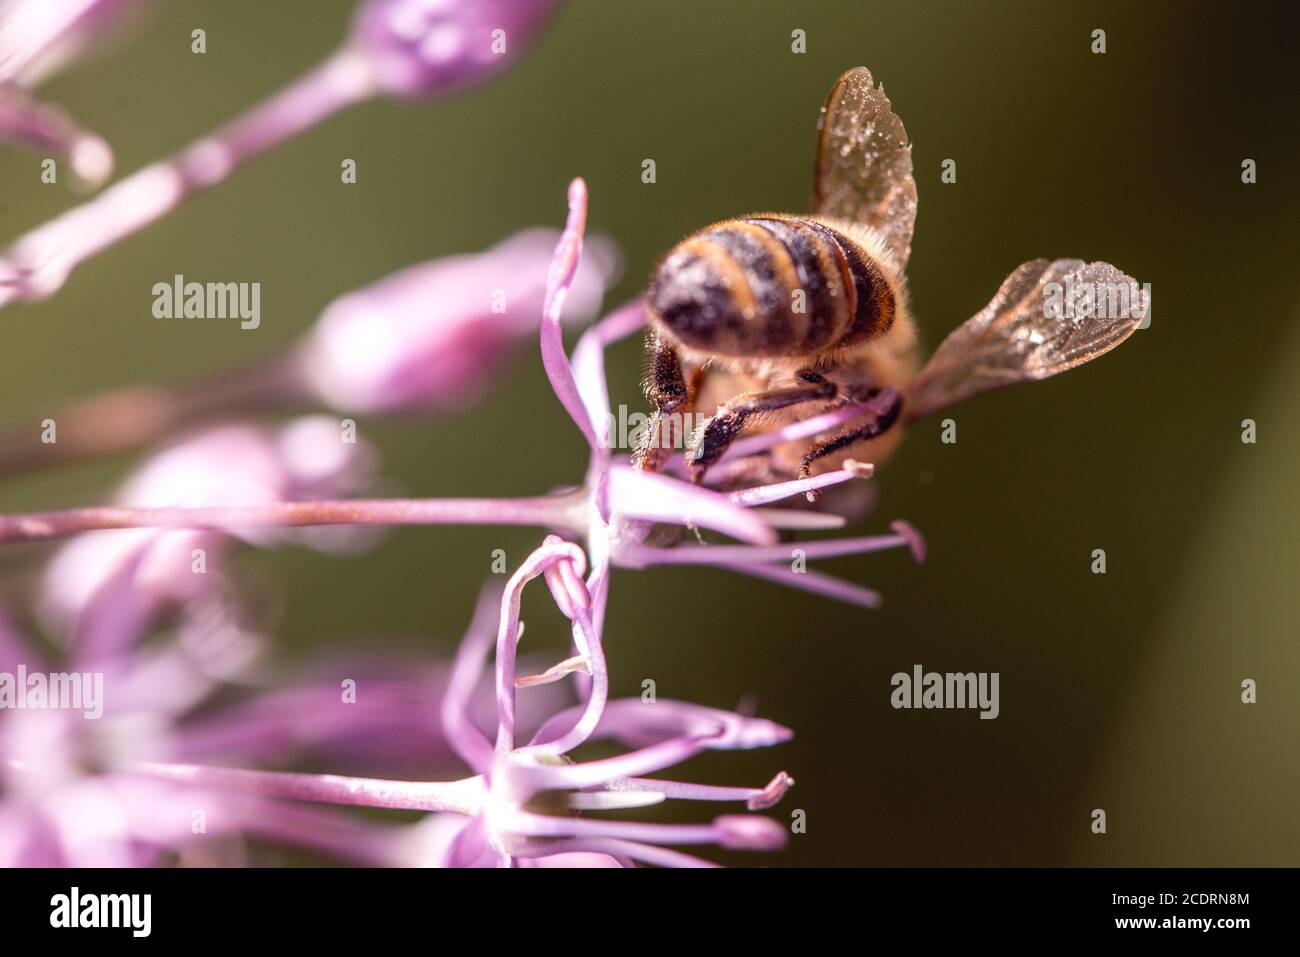 Bienen sammeln Nektar auf lila Alaun Knoblauch Blume. Makro Nahaufnahme. selektiven Fokus erschossen mit flachen DOF Stockfoto